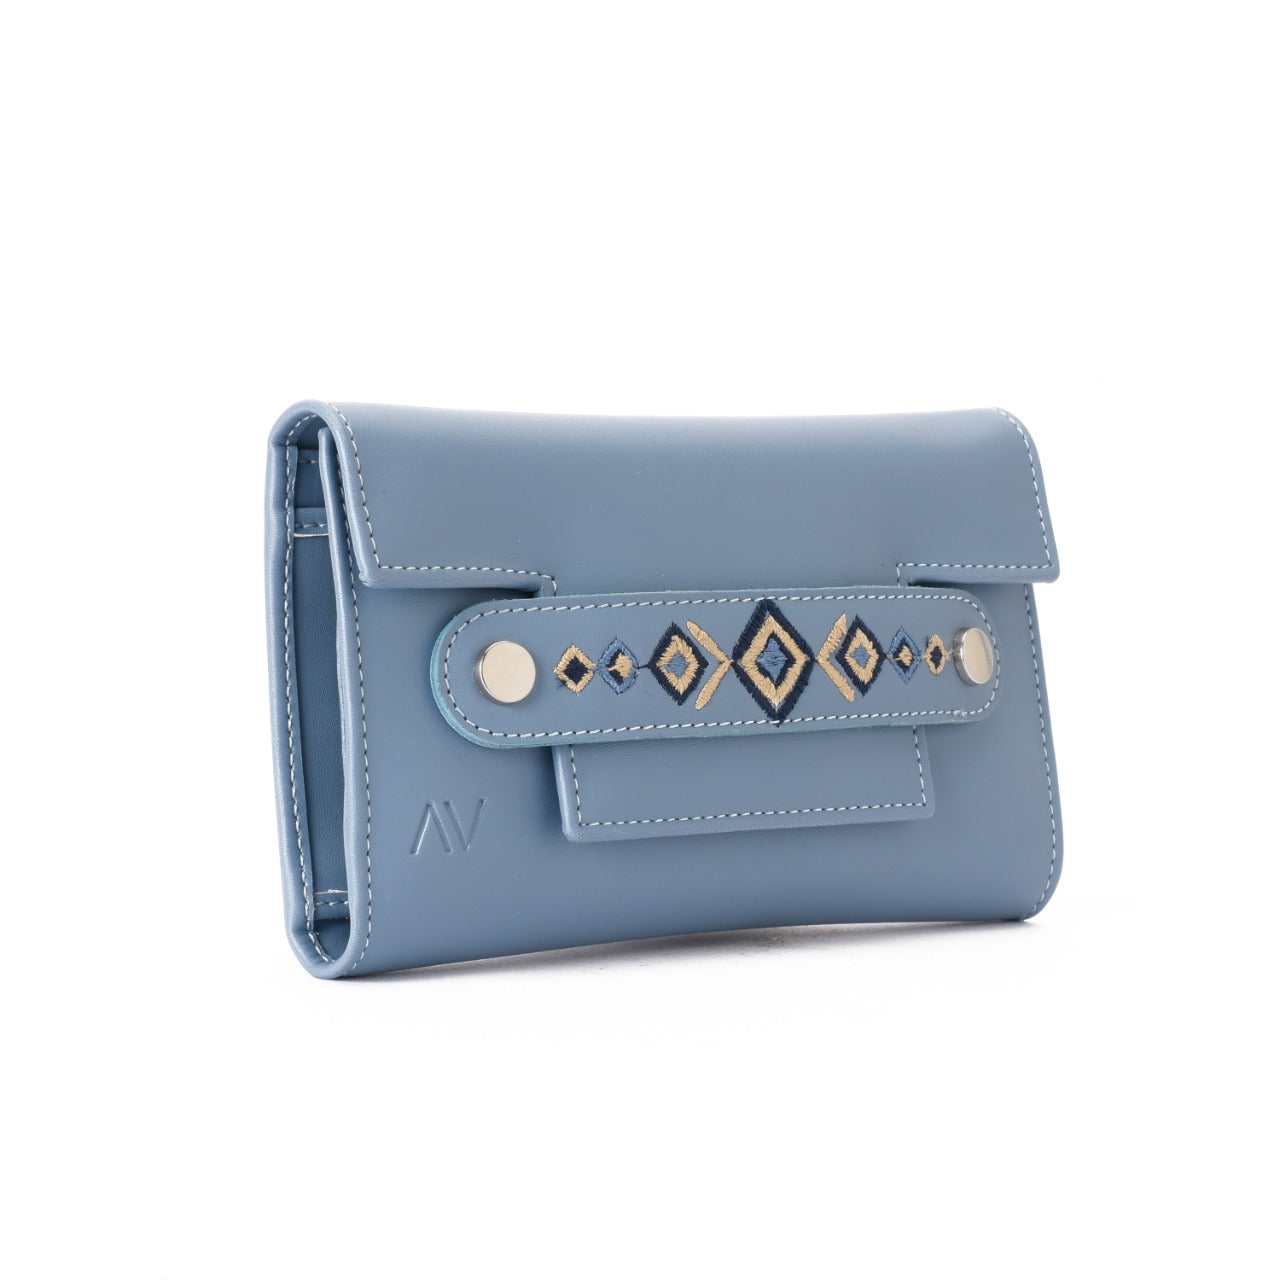 Vintage Baby blue Wallet - Code 525